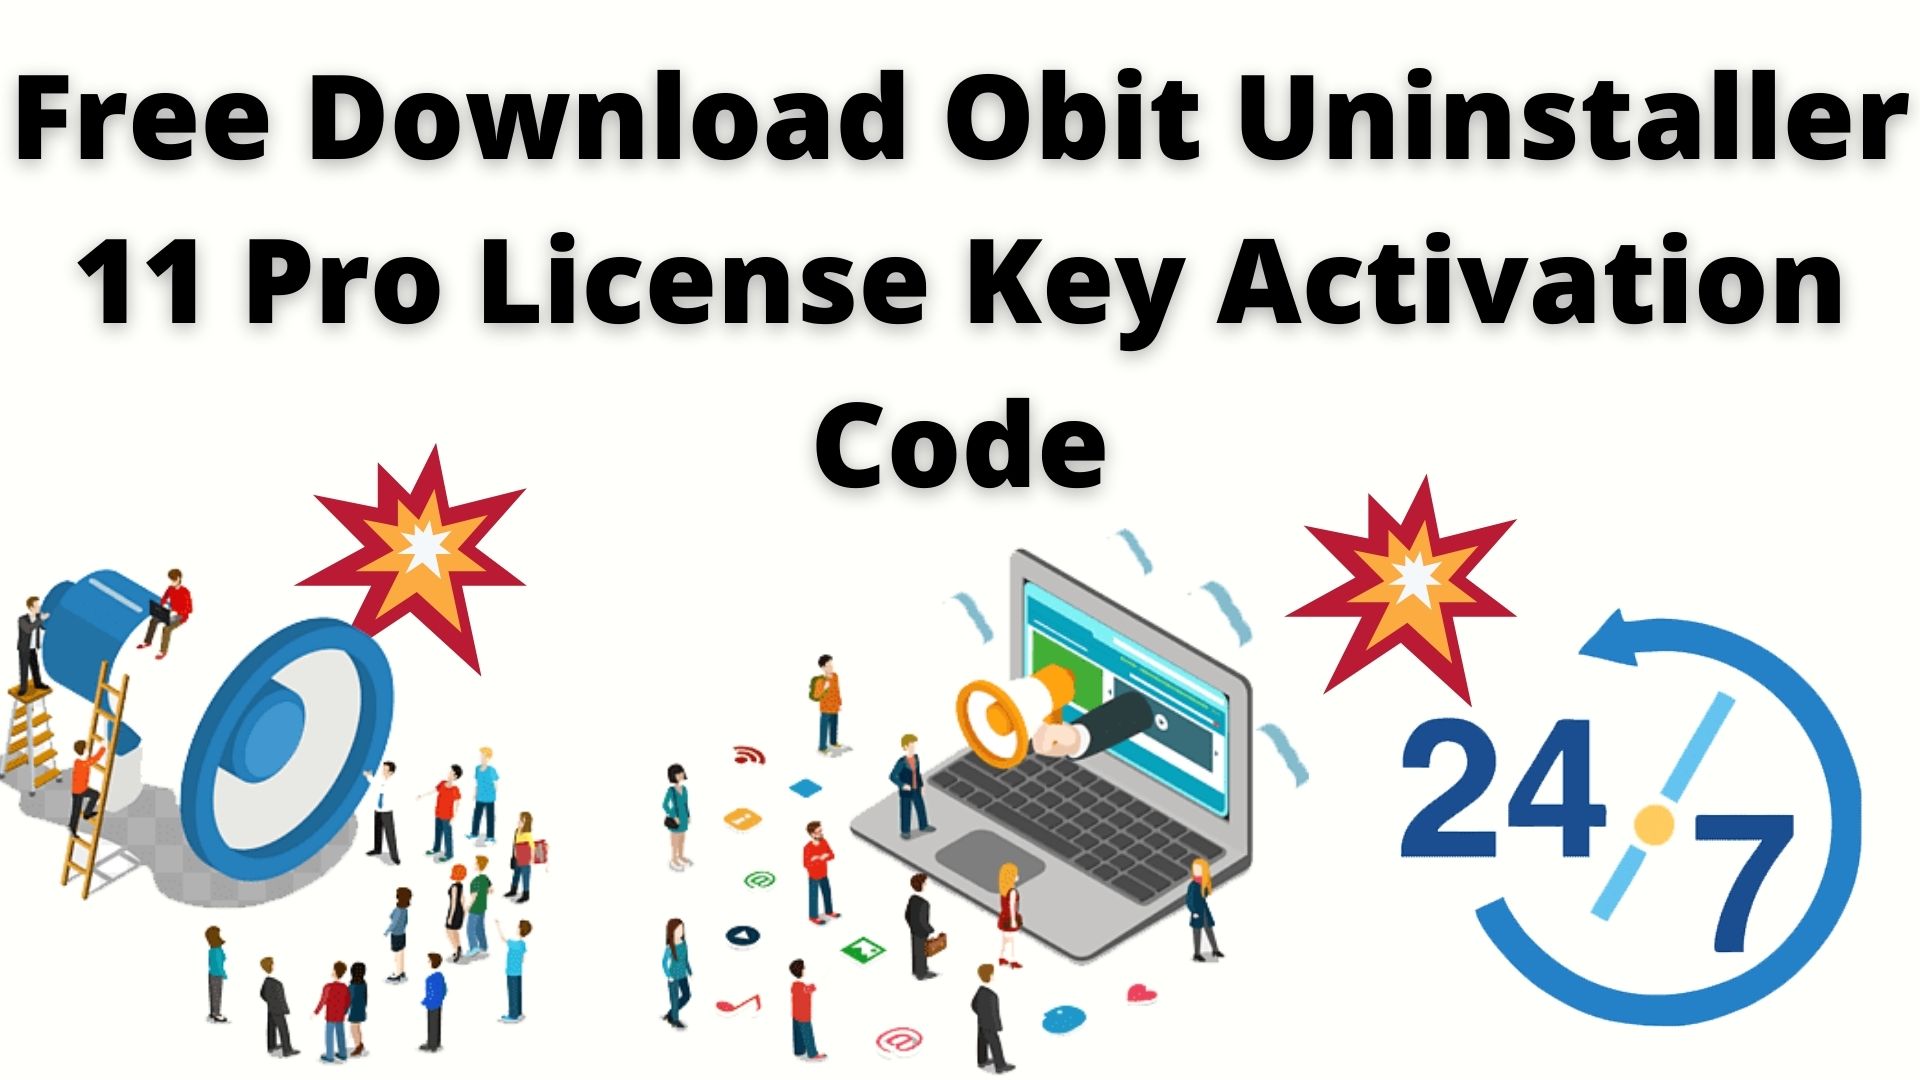 Free download obit uninstaller 11 pro license key activation code